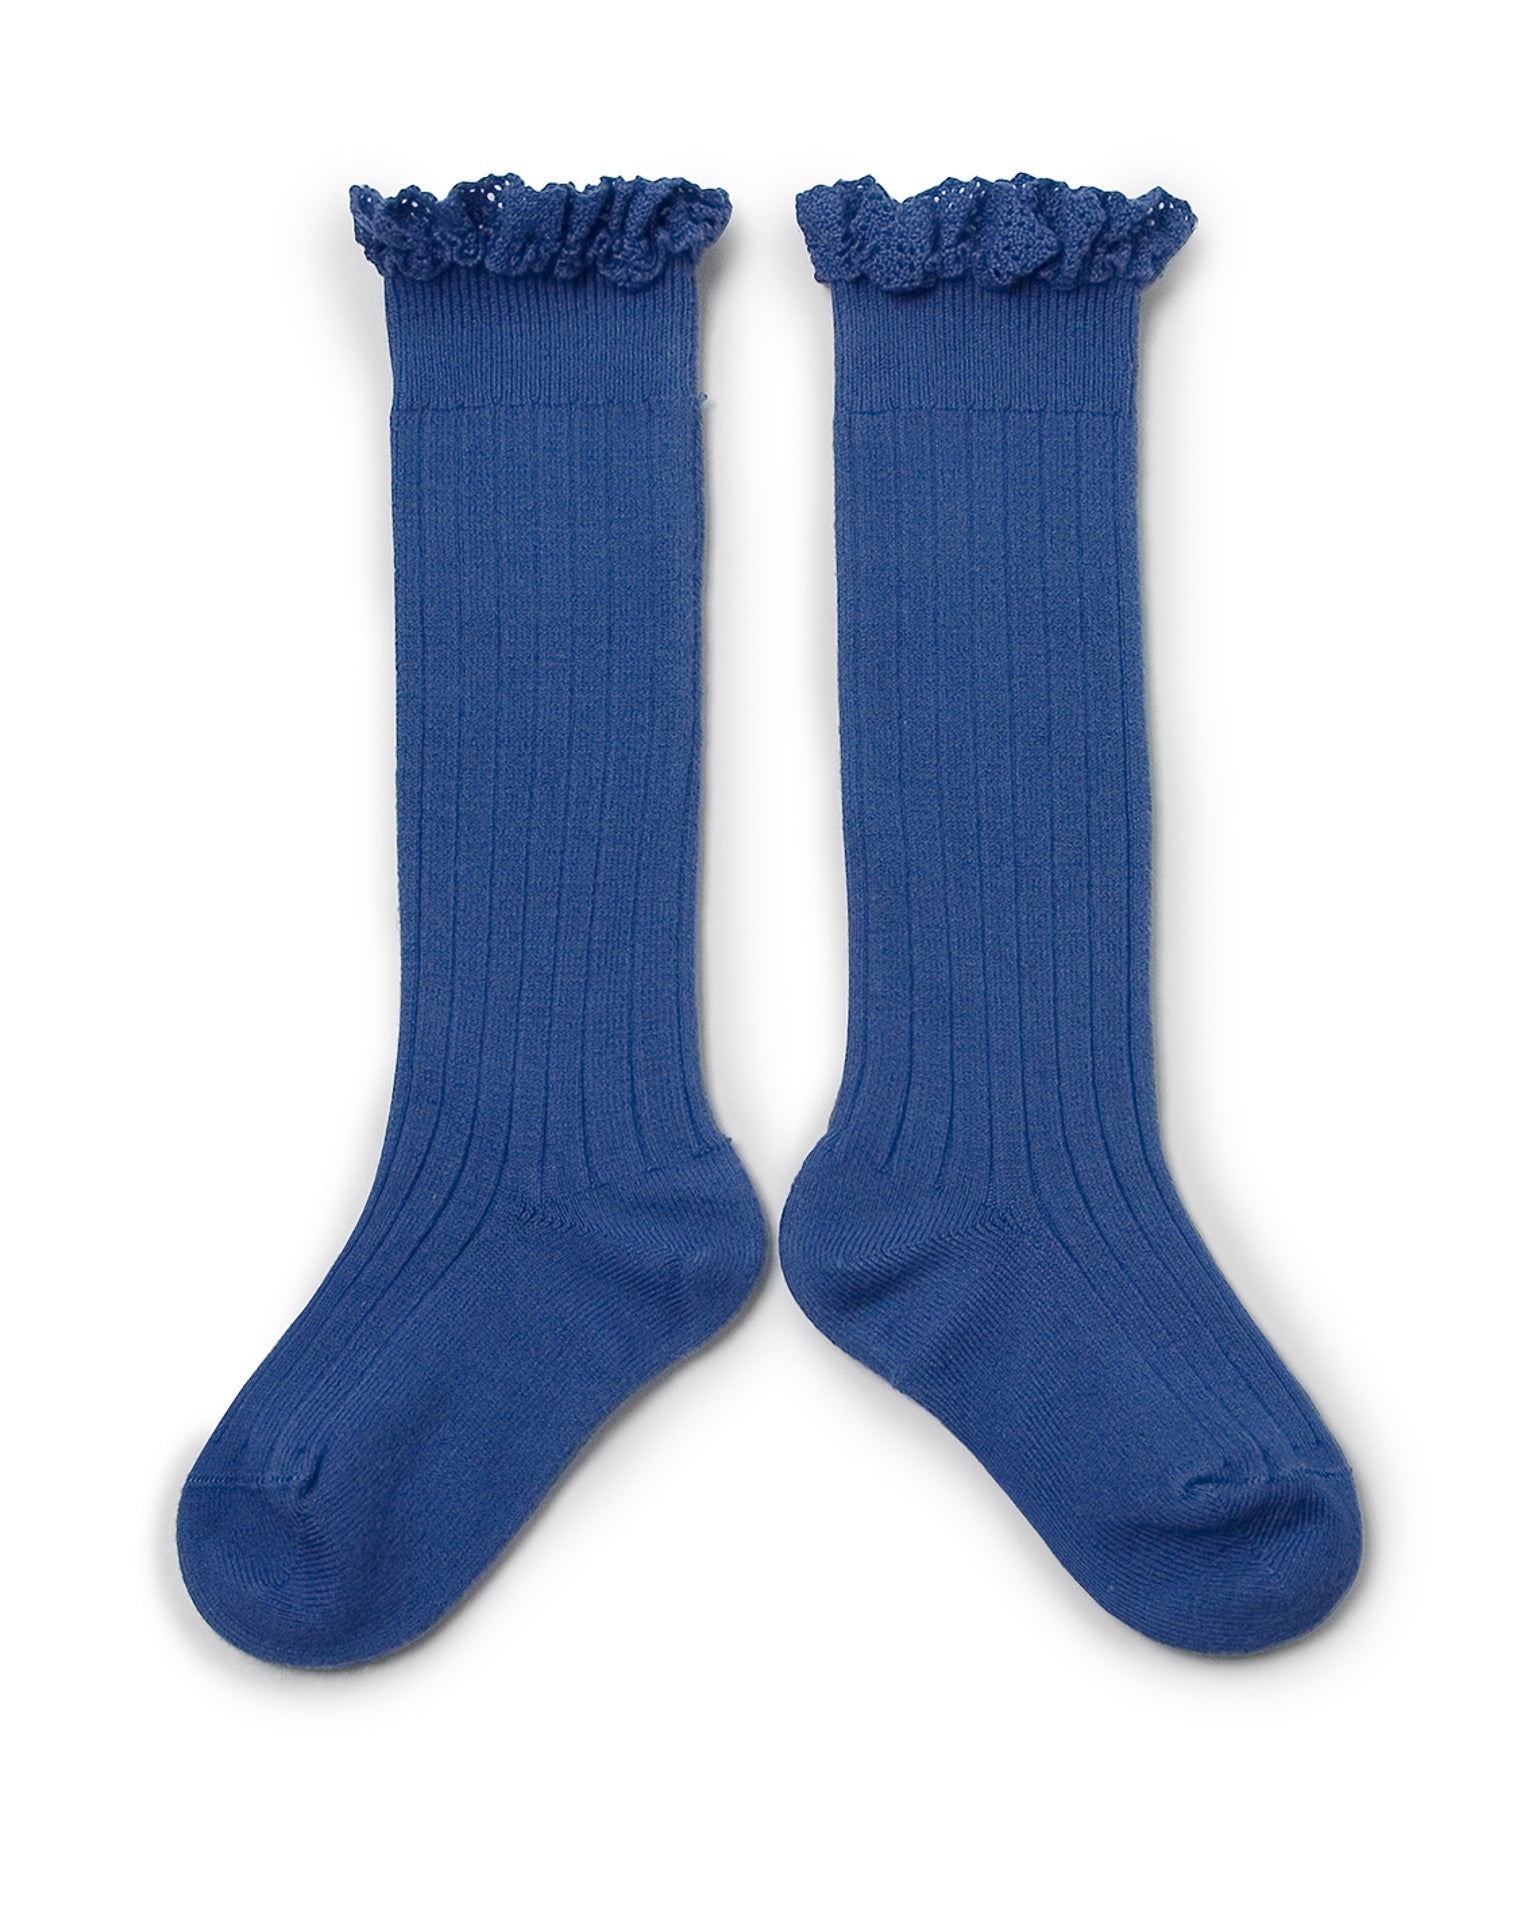 Little collegien accessories joséphine knee socks in bleu saphir